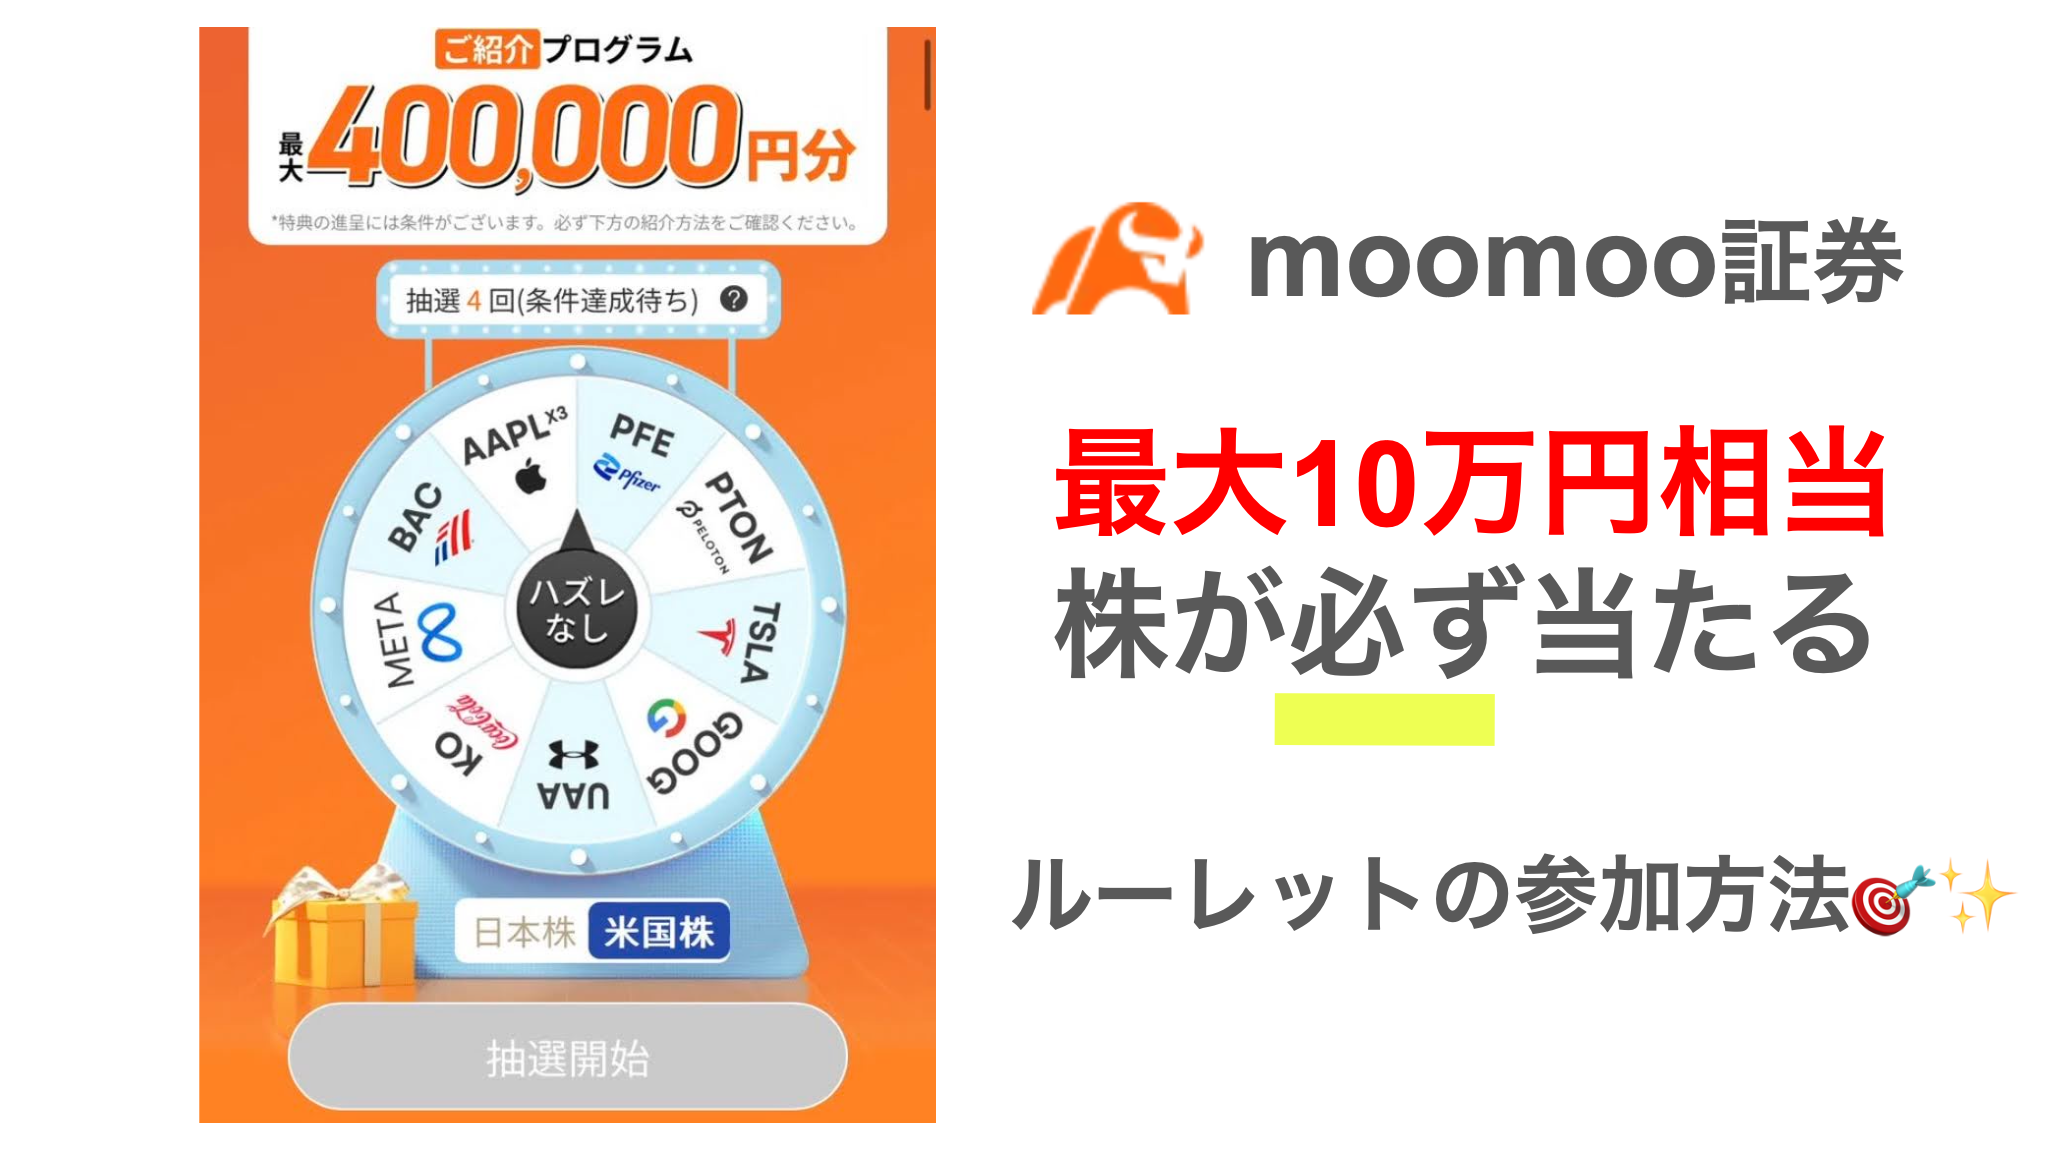 moomoo証券 株が当たるルーレット キャンペーン